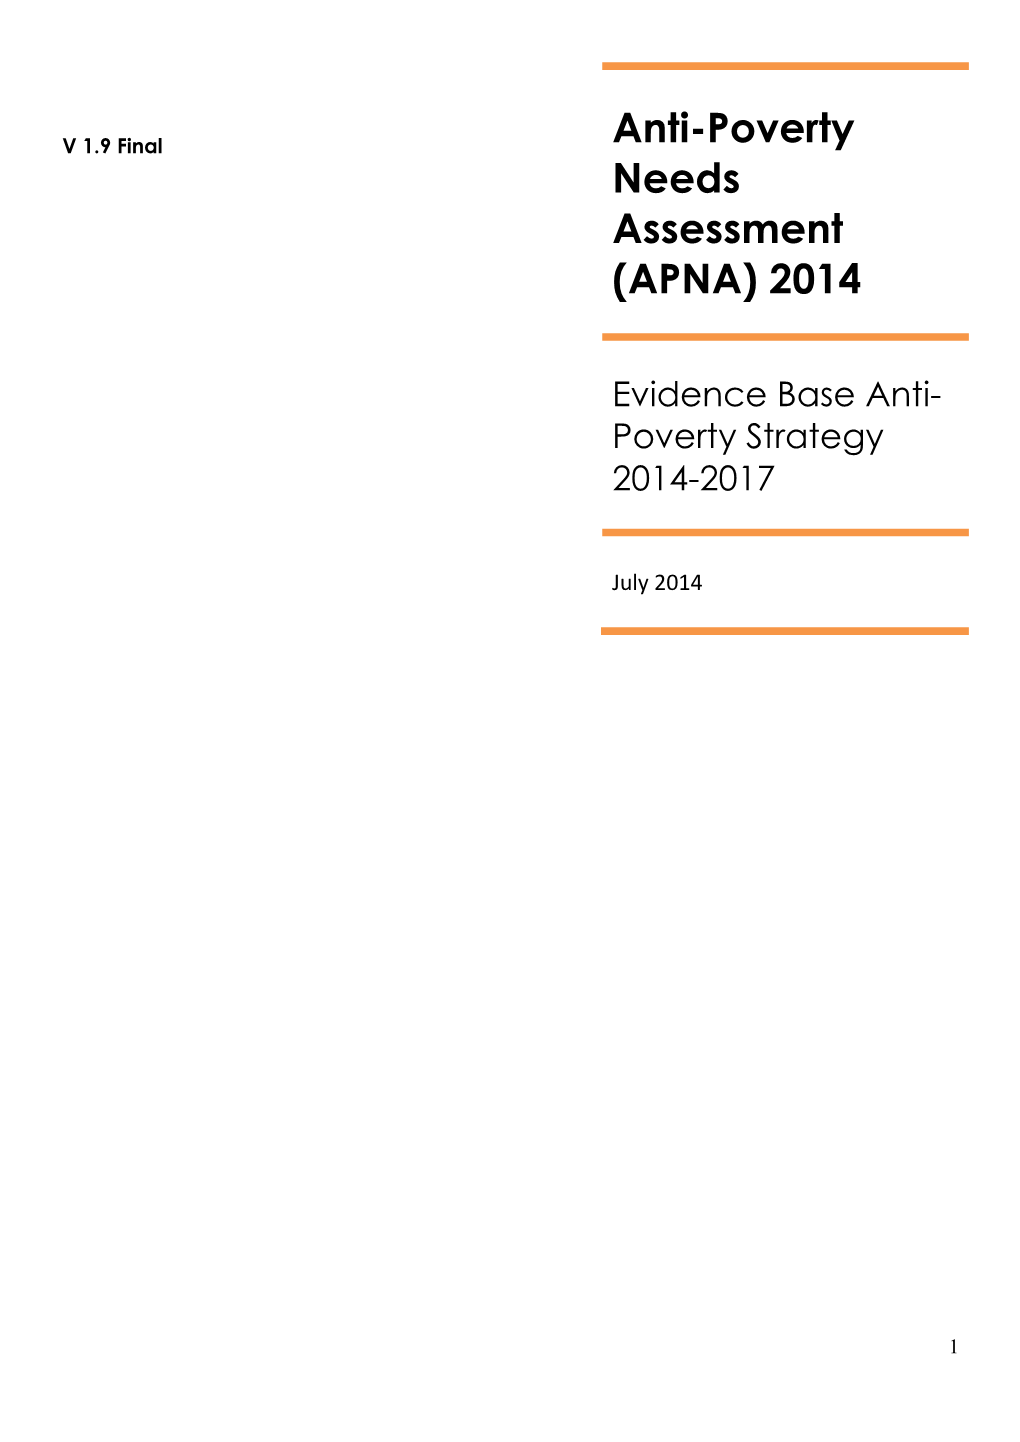 Anti-Poverty Needs Assessment (APNA) 2014